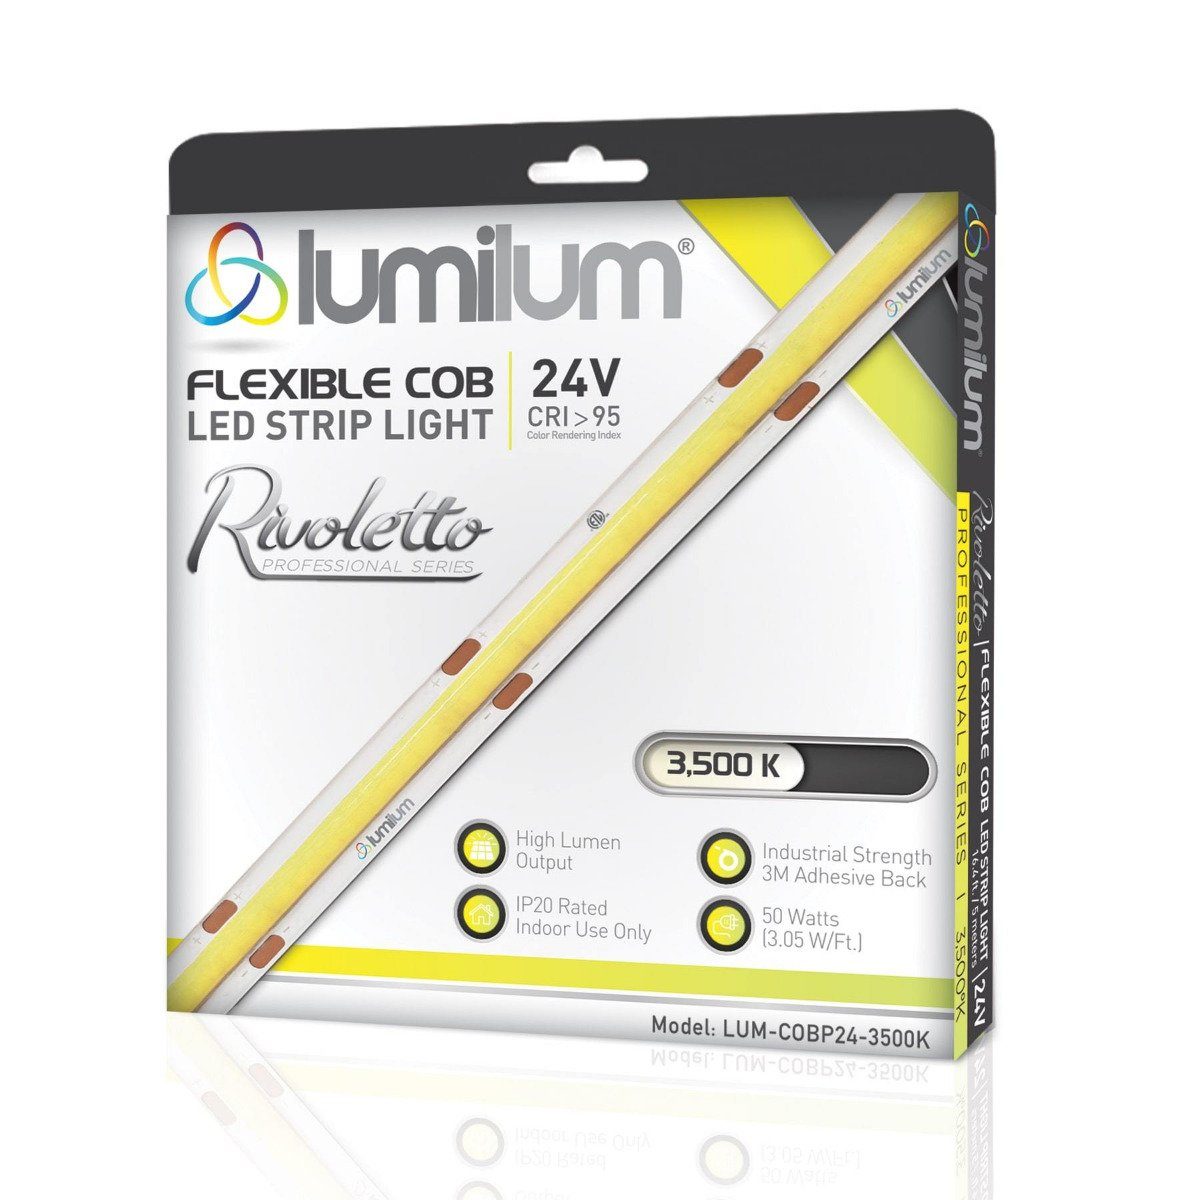 Lumilum 3500k led strip light packaging with yellow and white accents showing led strip with yellow line